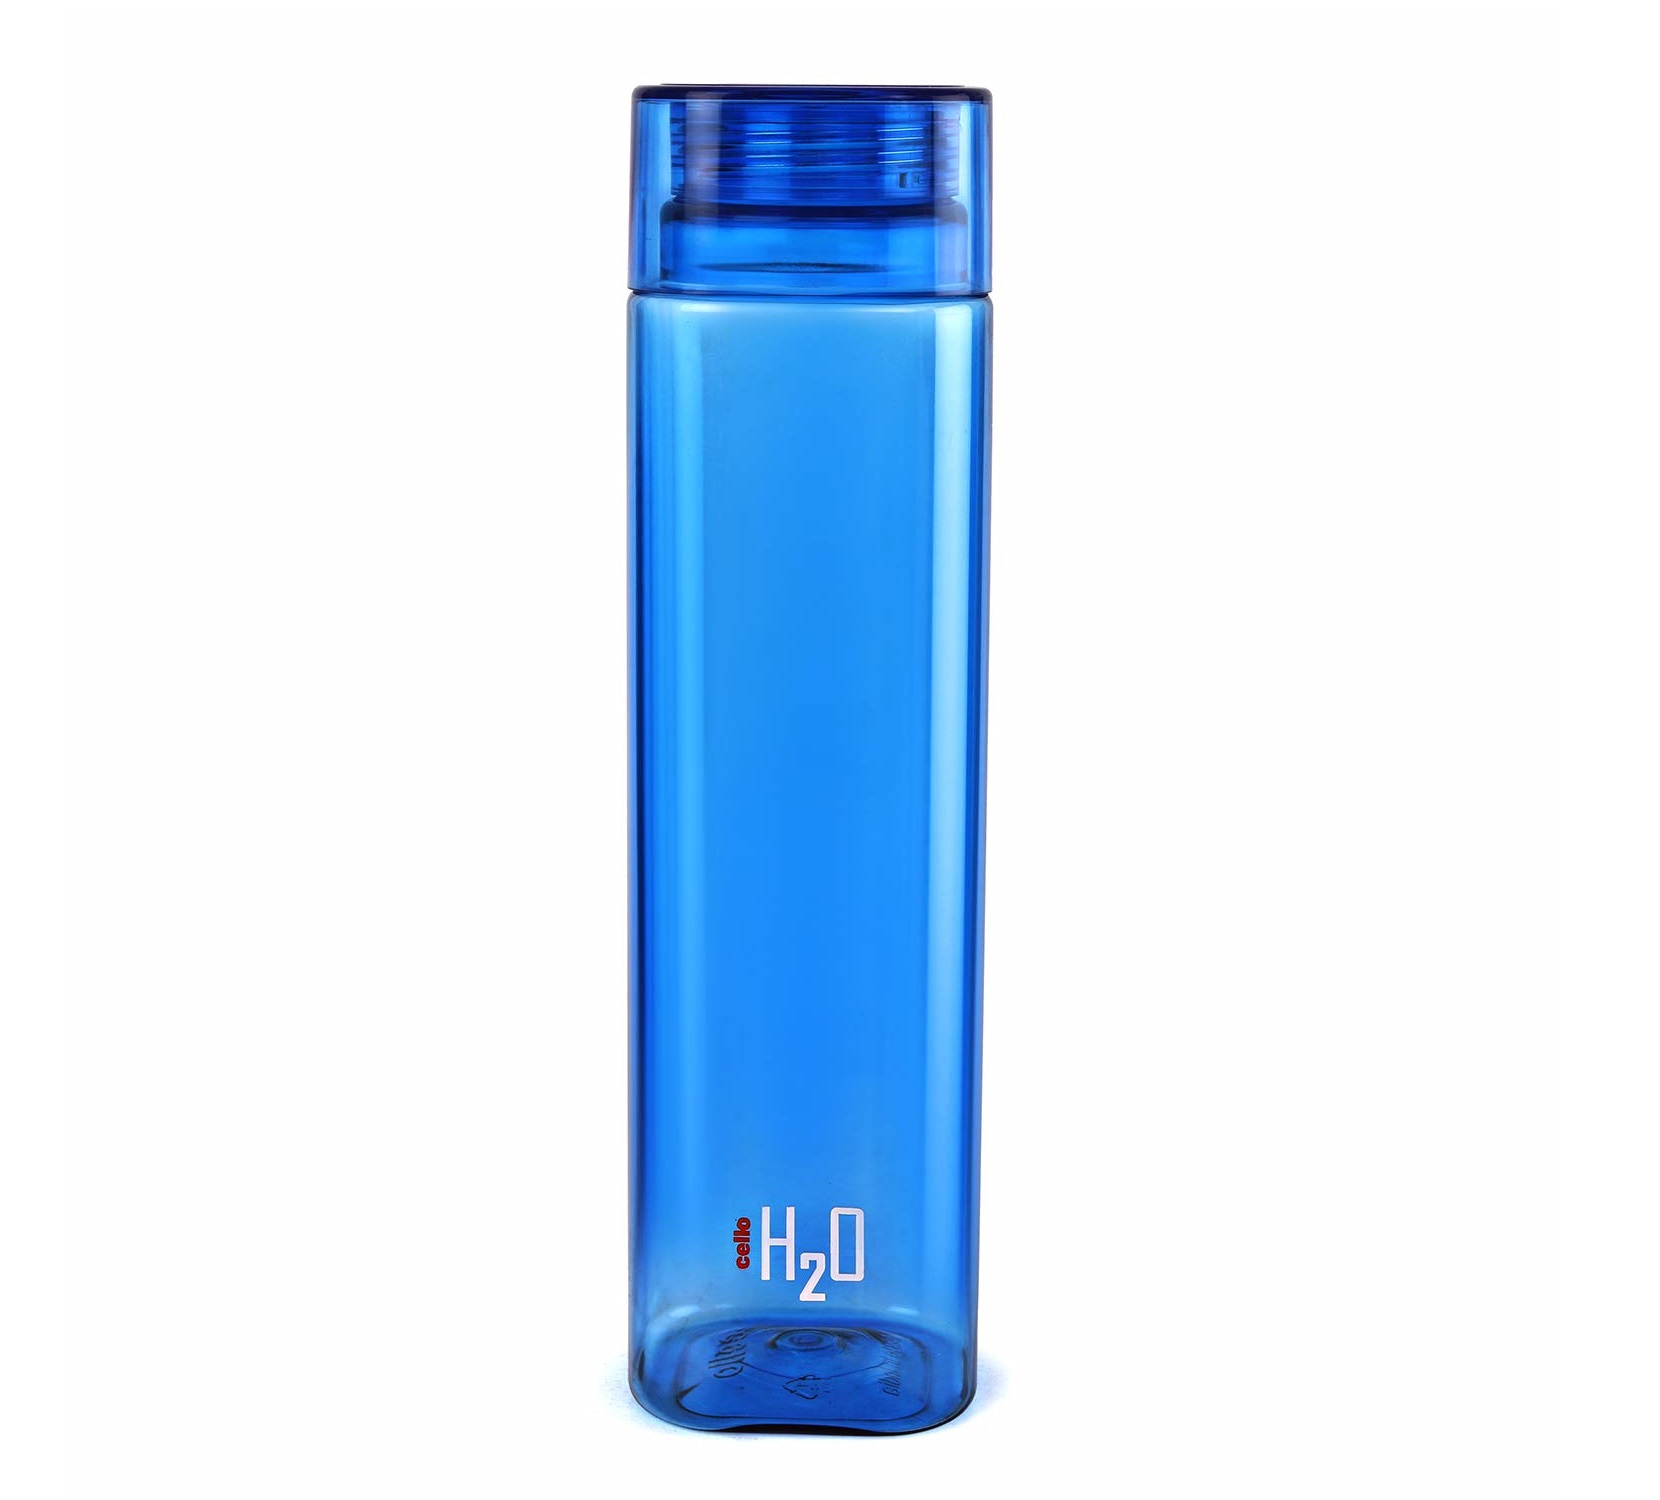 Cello H2O Premium Plastic Water Bottle (Squaremate Blue, 1L)